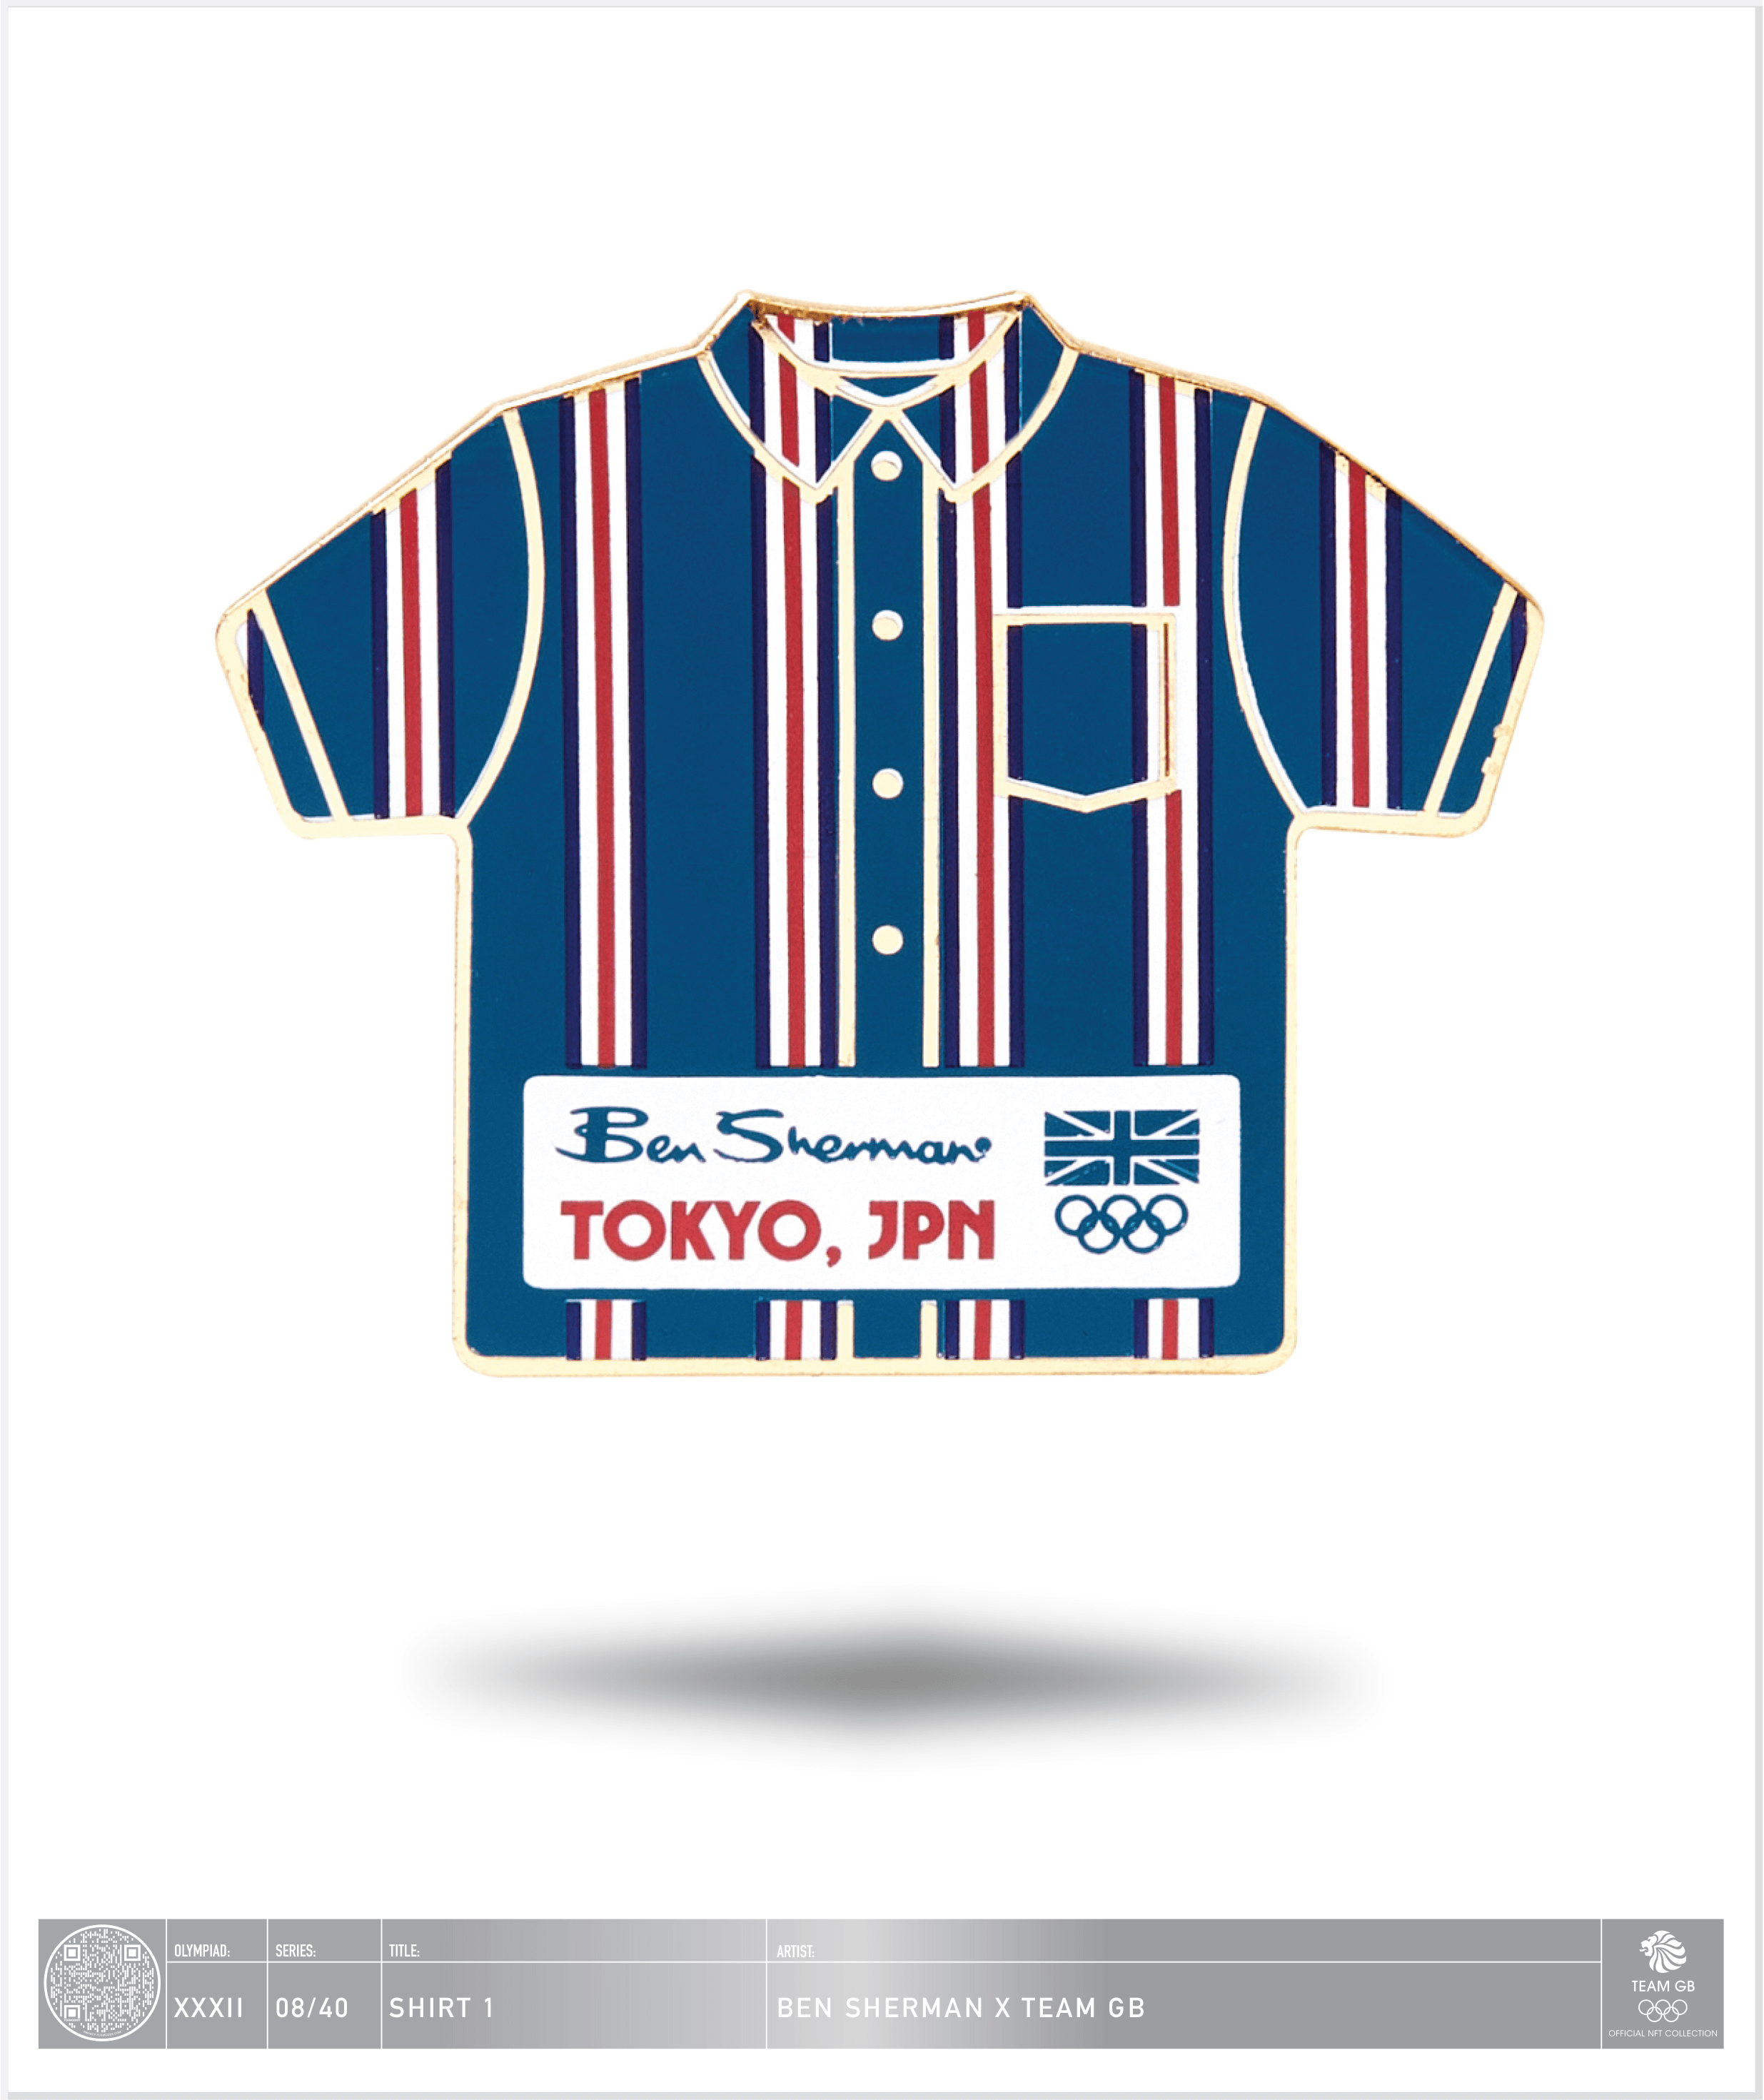 Ben Sherman Tokyo - Shirt 1 - 8 / 40